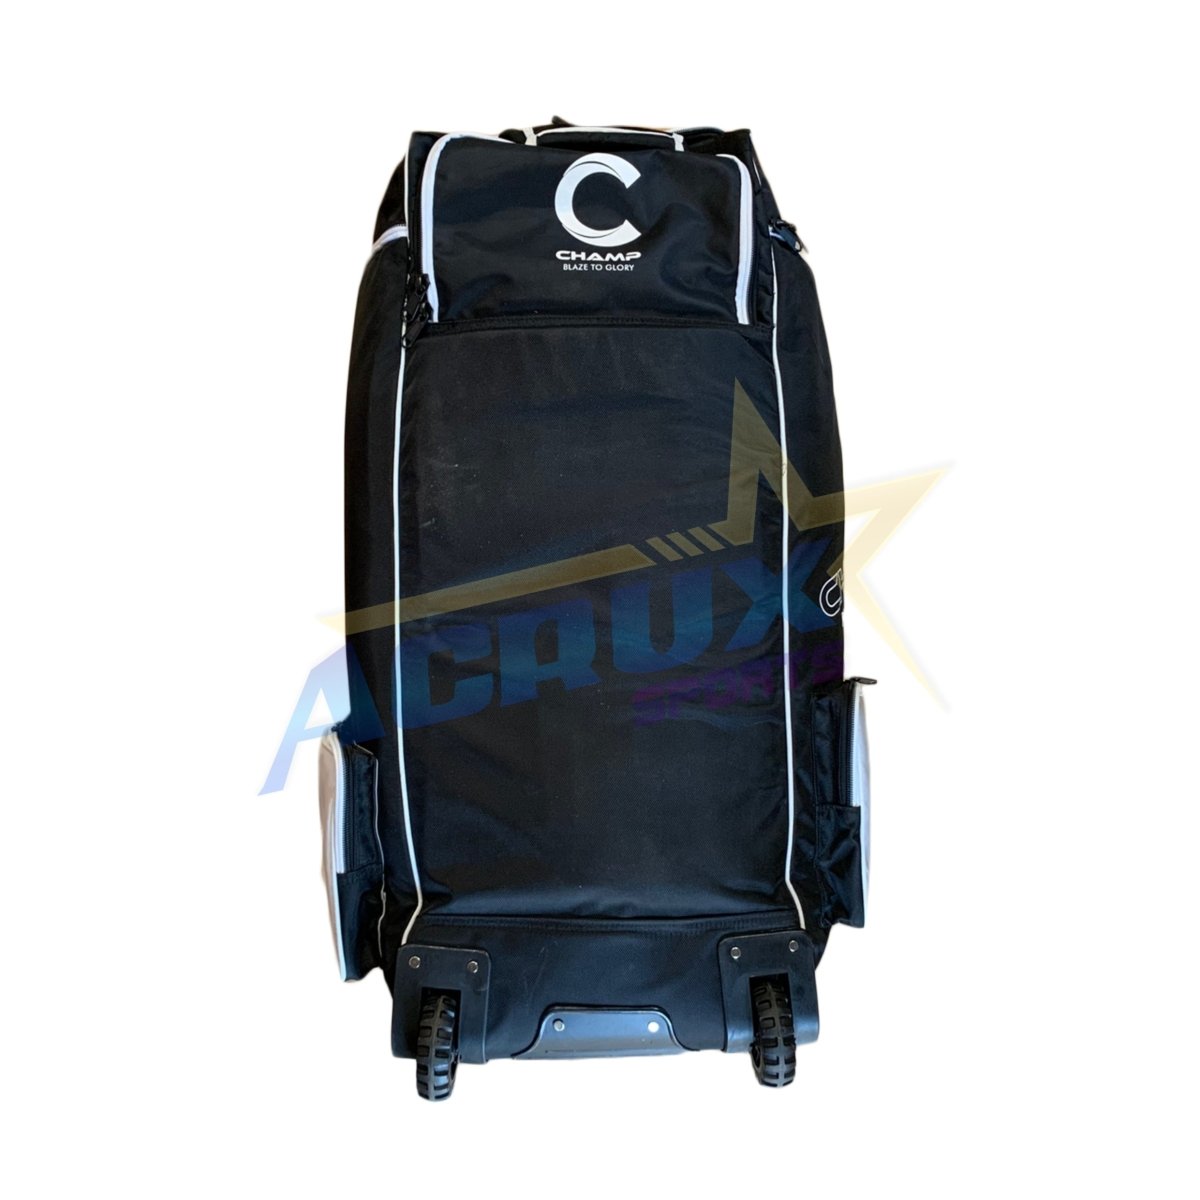 Champ Test Pro Duffle Cricket Kit Bag Wheelie - Acrux Sports